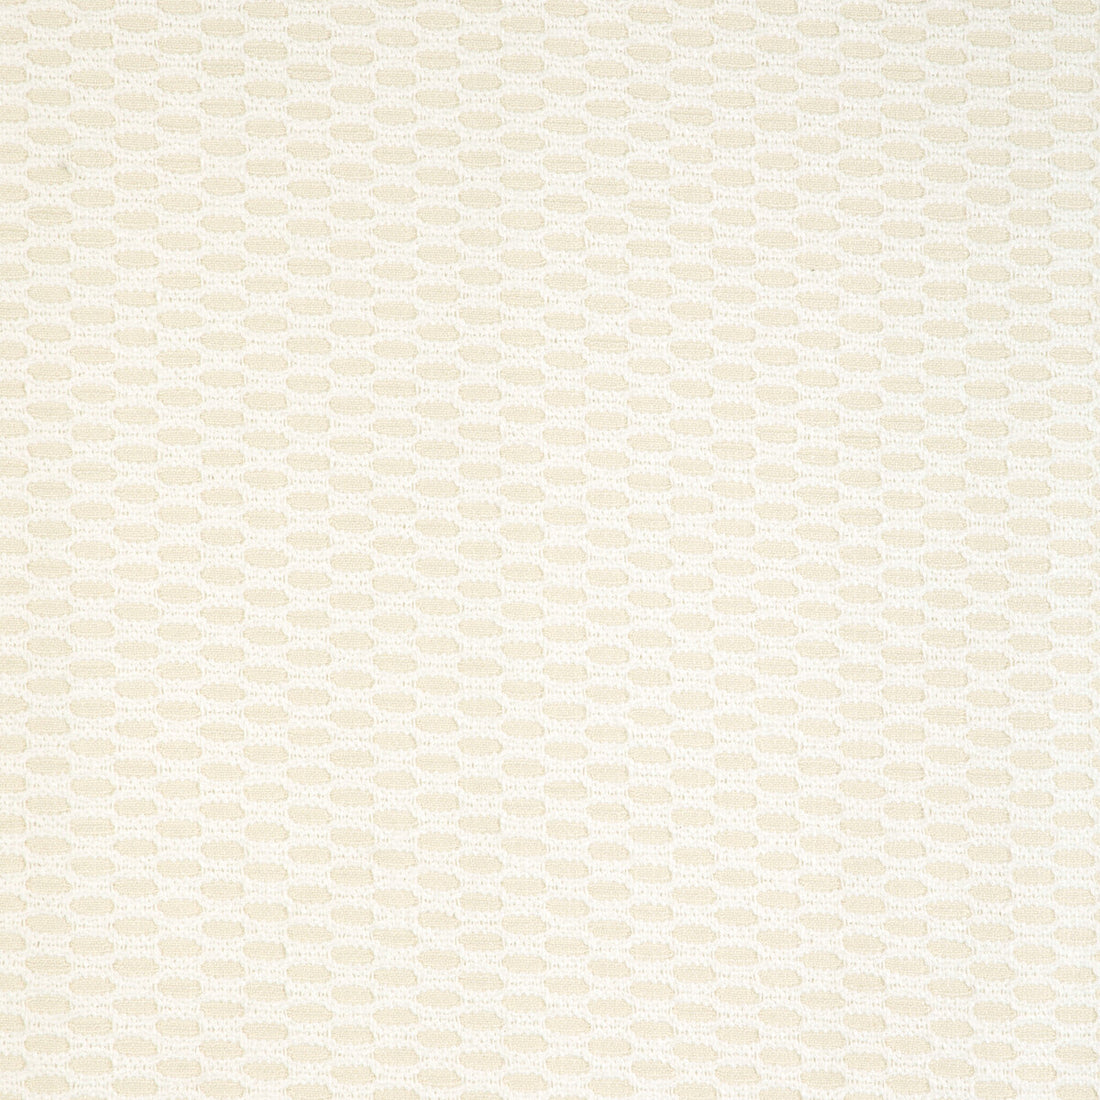 Kravet Smart fabric in 37005-101 color - pattern 37005.101.0 - by Kravet Smart in the Pavilion collection